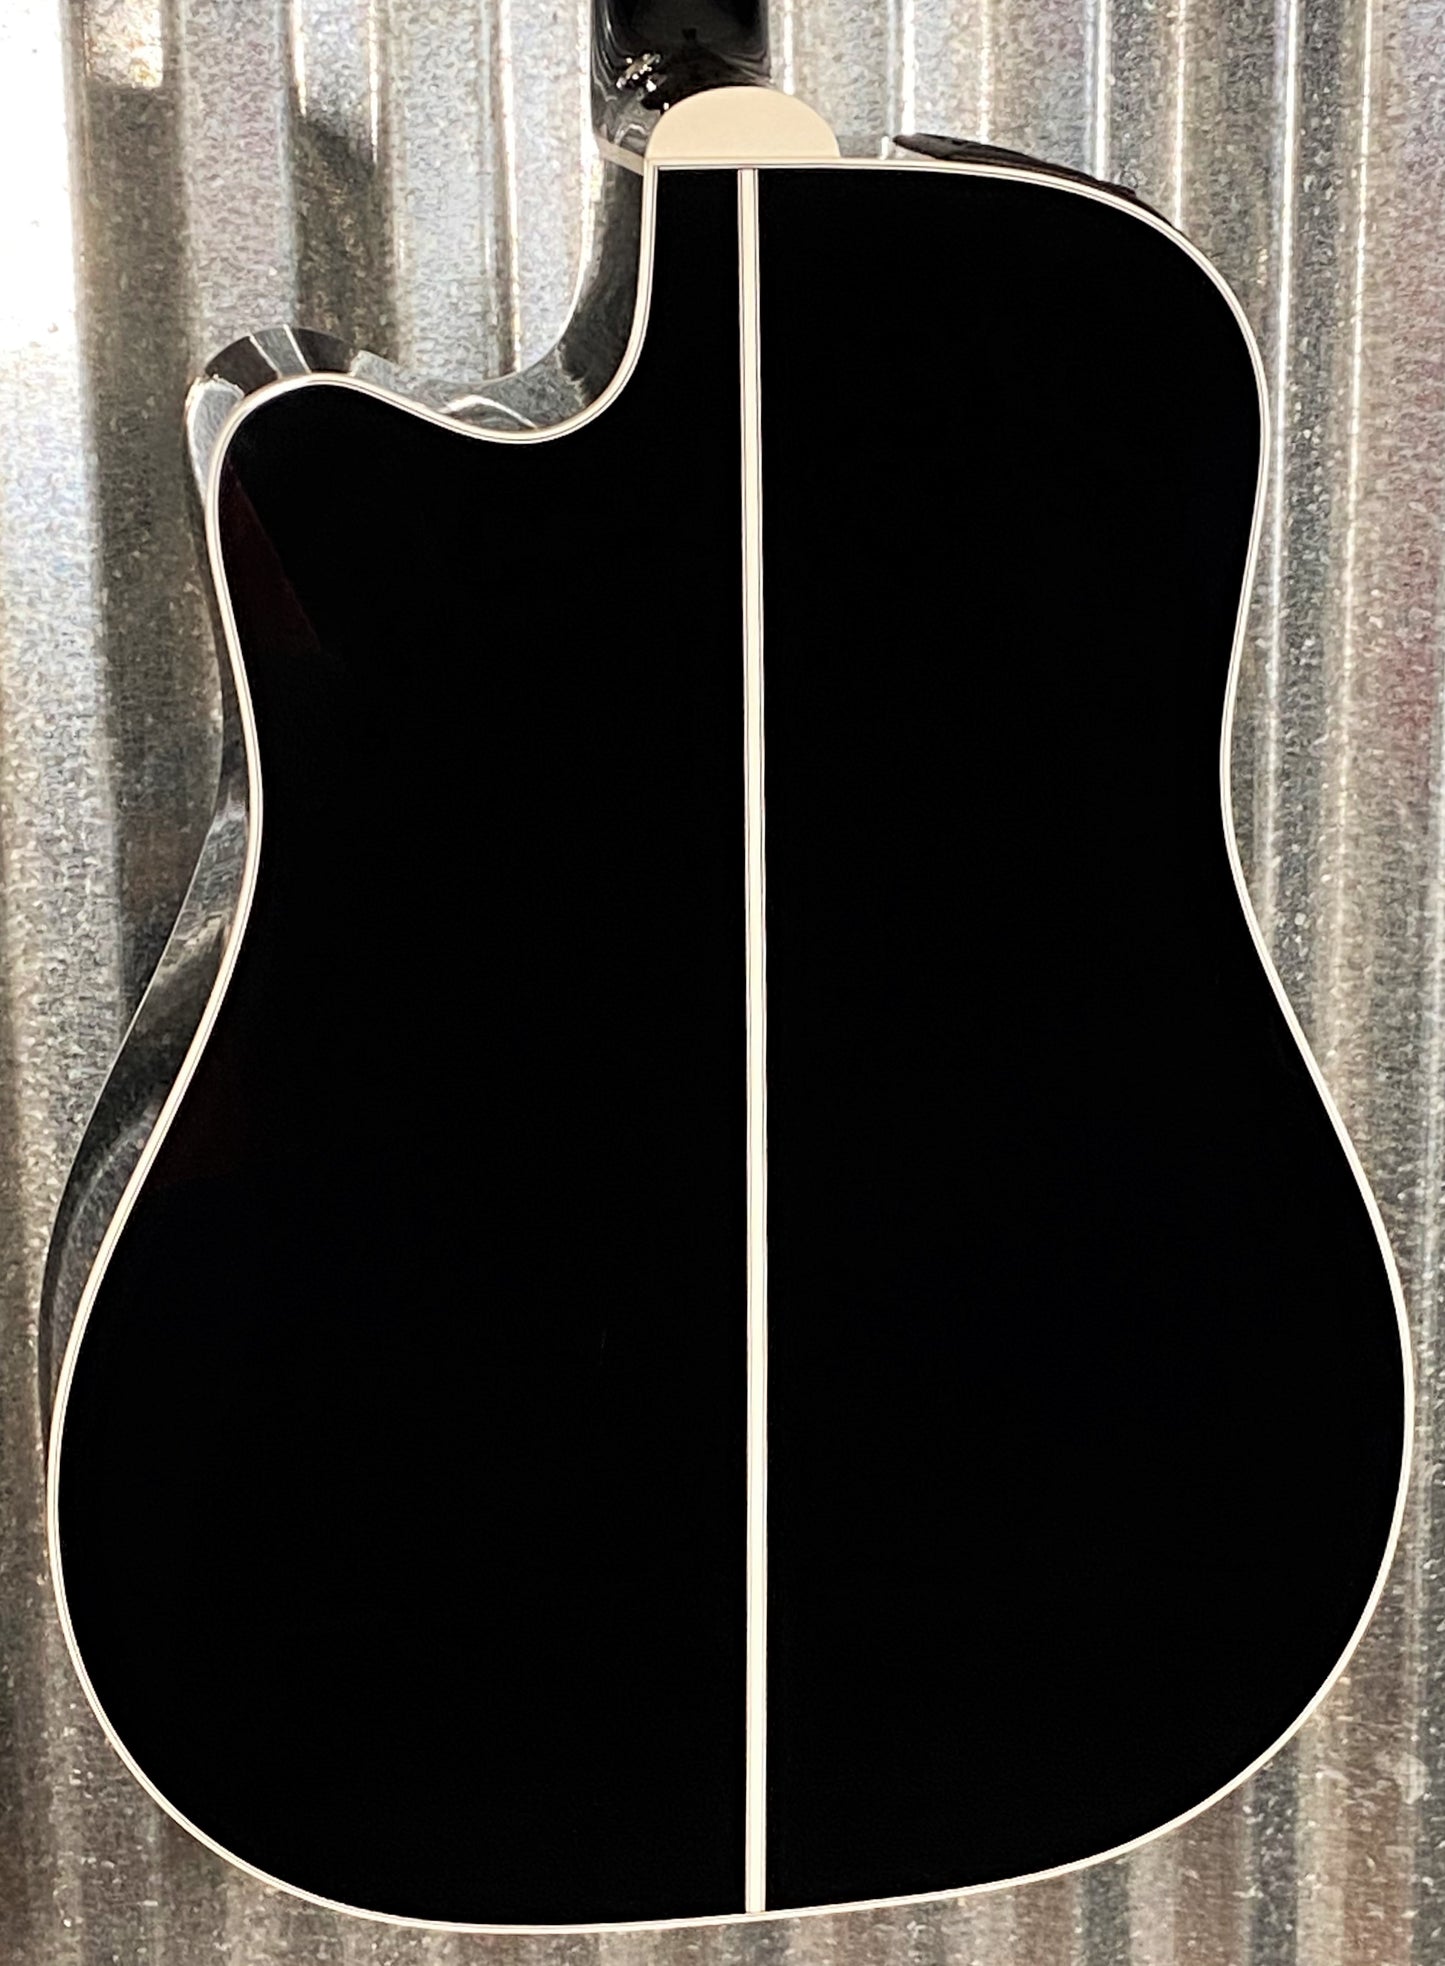 Takamine EF341SC Dreadnaught Acoustic Electric Cutaway Guitar Black & Case #0163